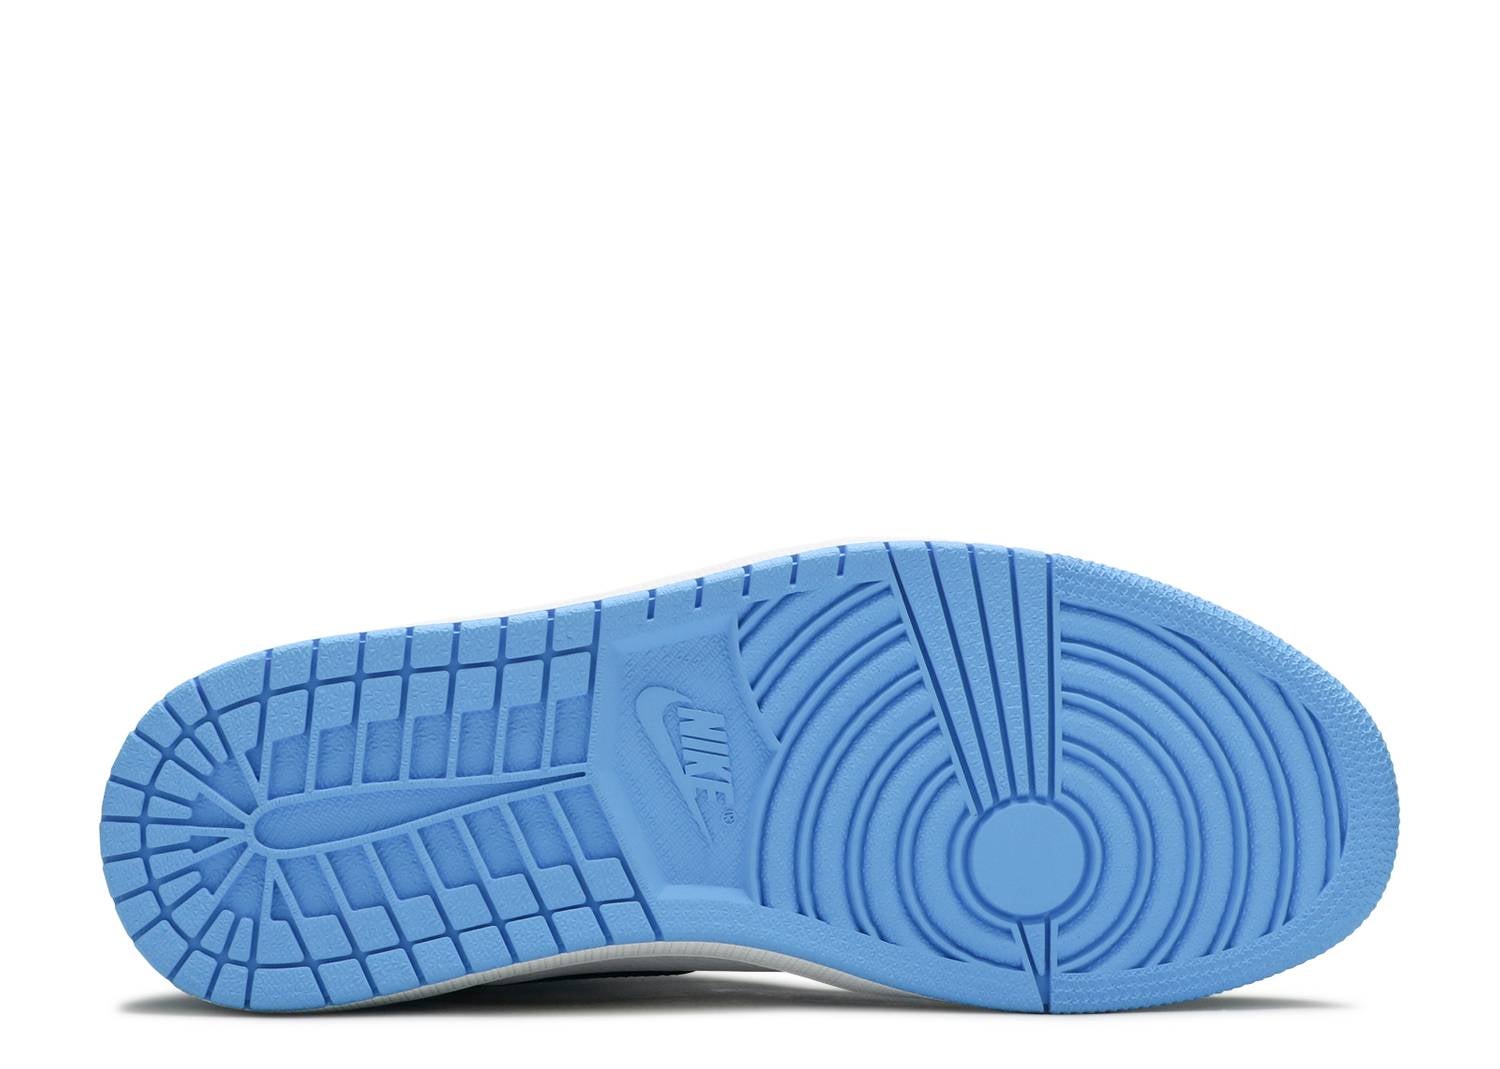 Image of Nike Retro Air Jordan 1 "University Blue" Sz 6.5 